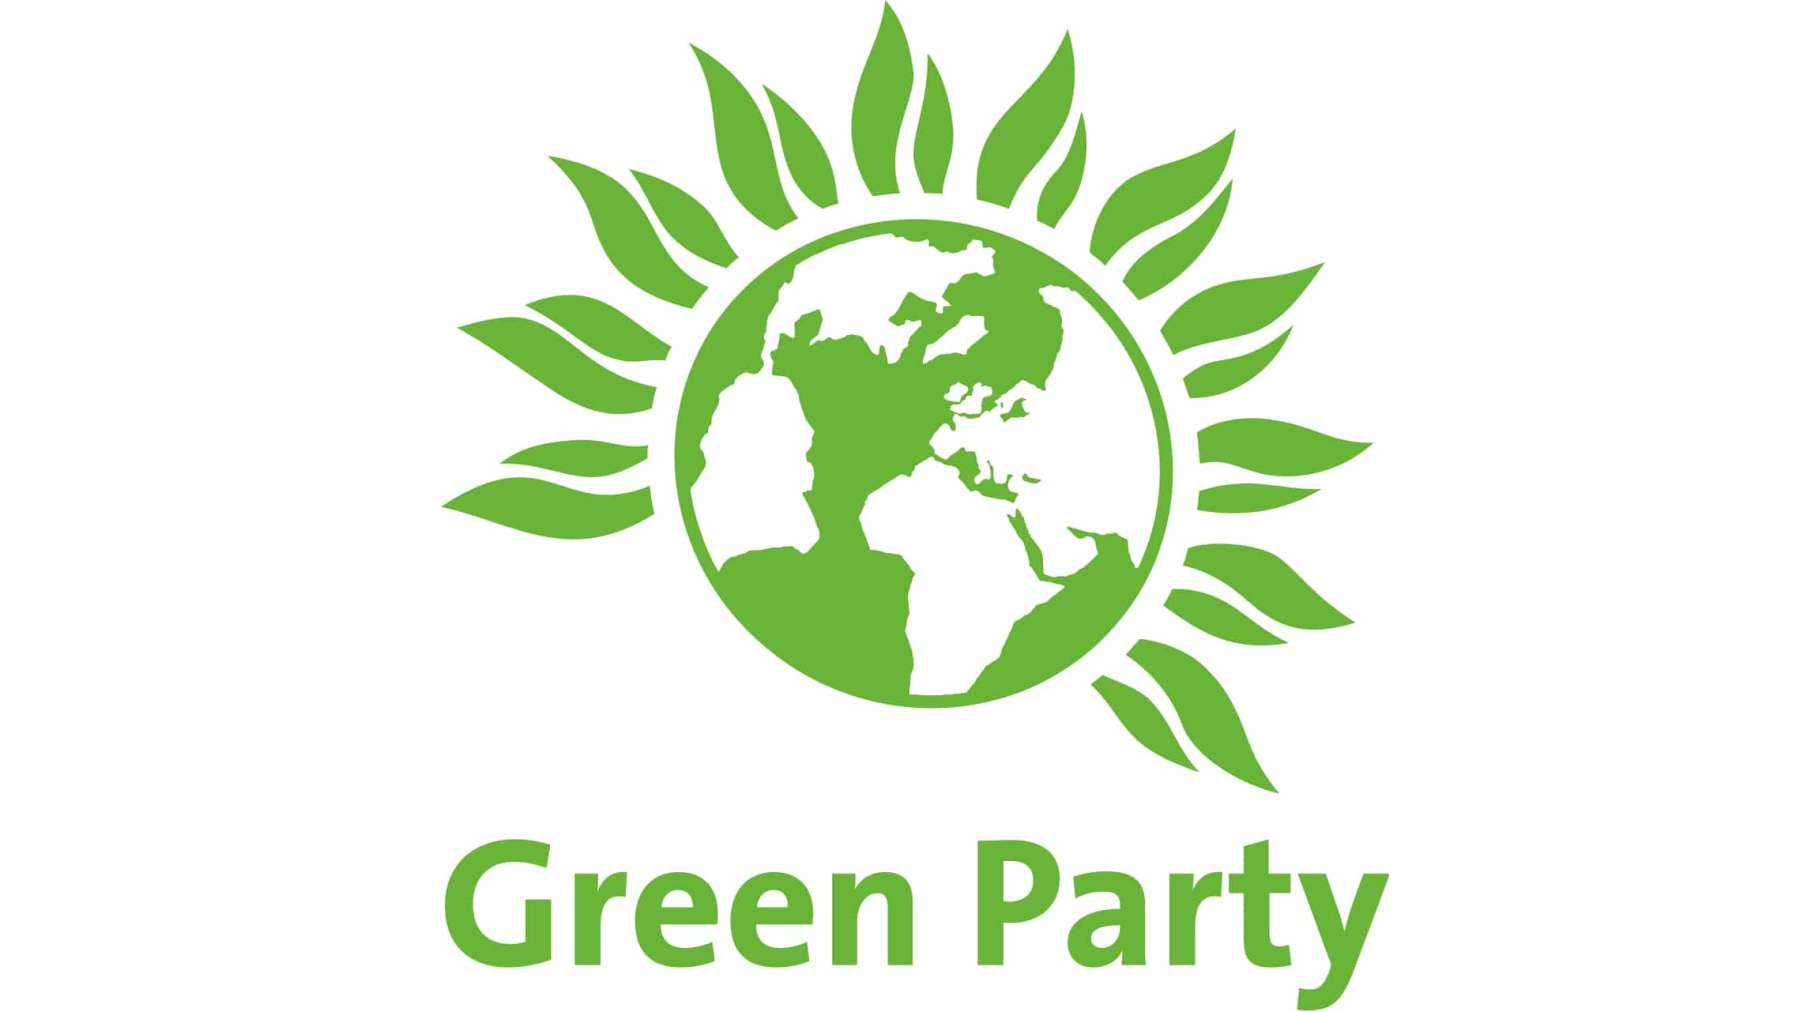 Rhode Island News: R.I. Green Party won’t run a presidential candidate